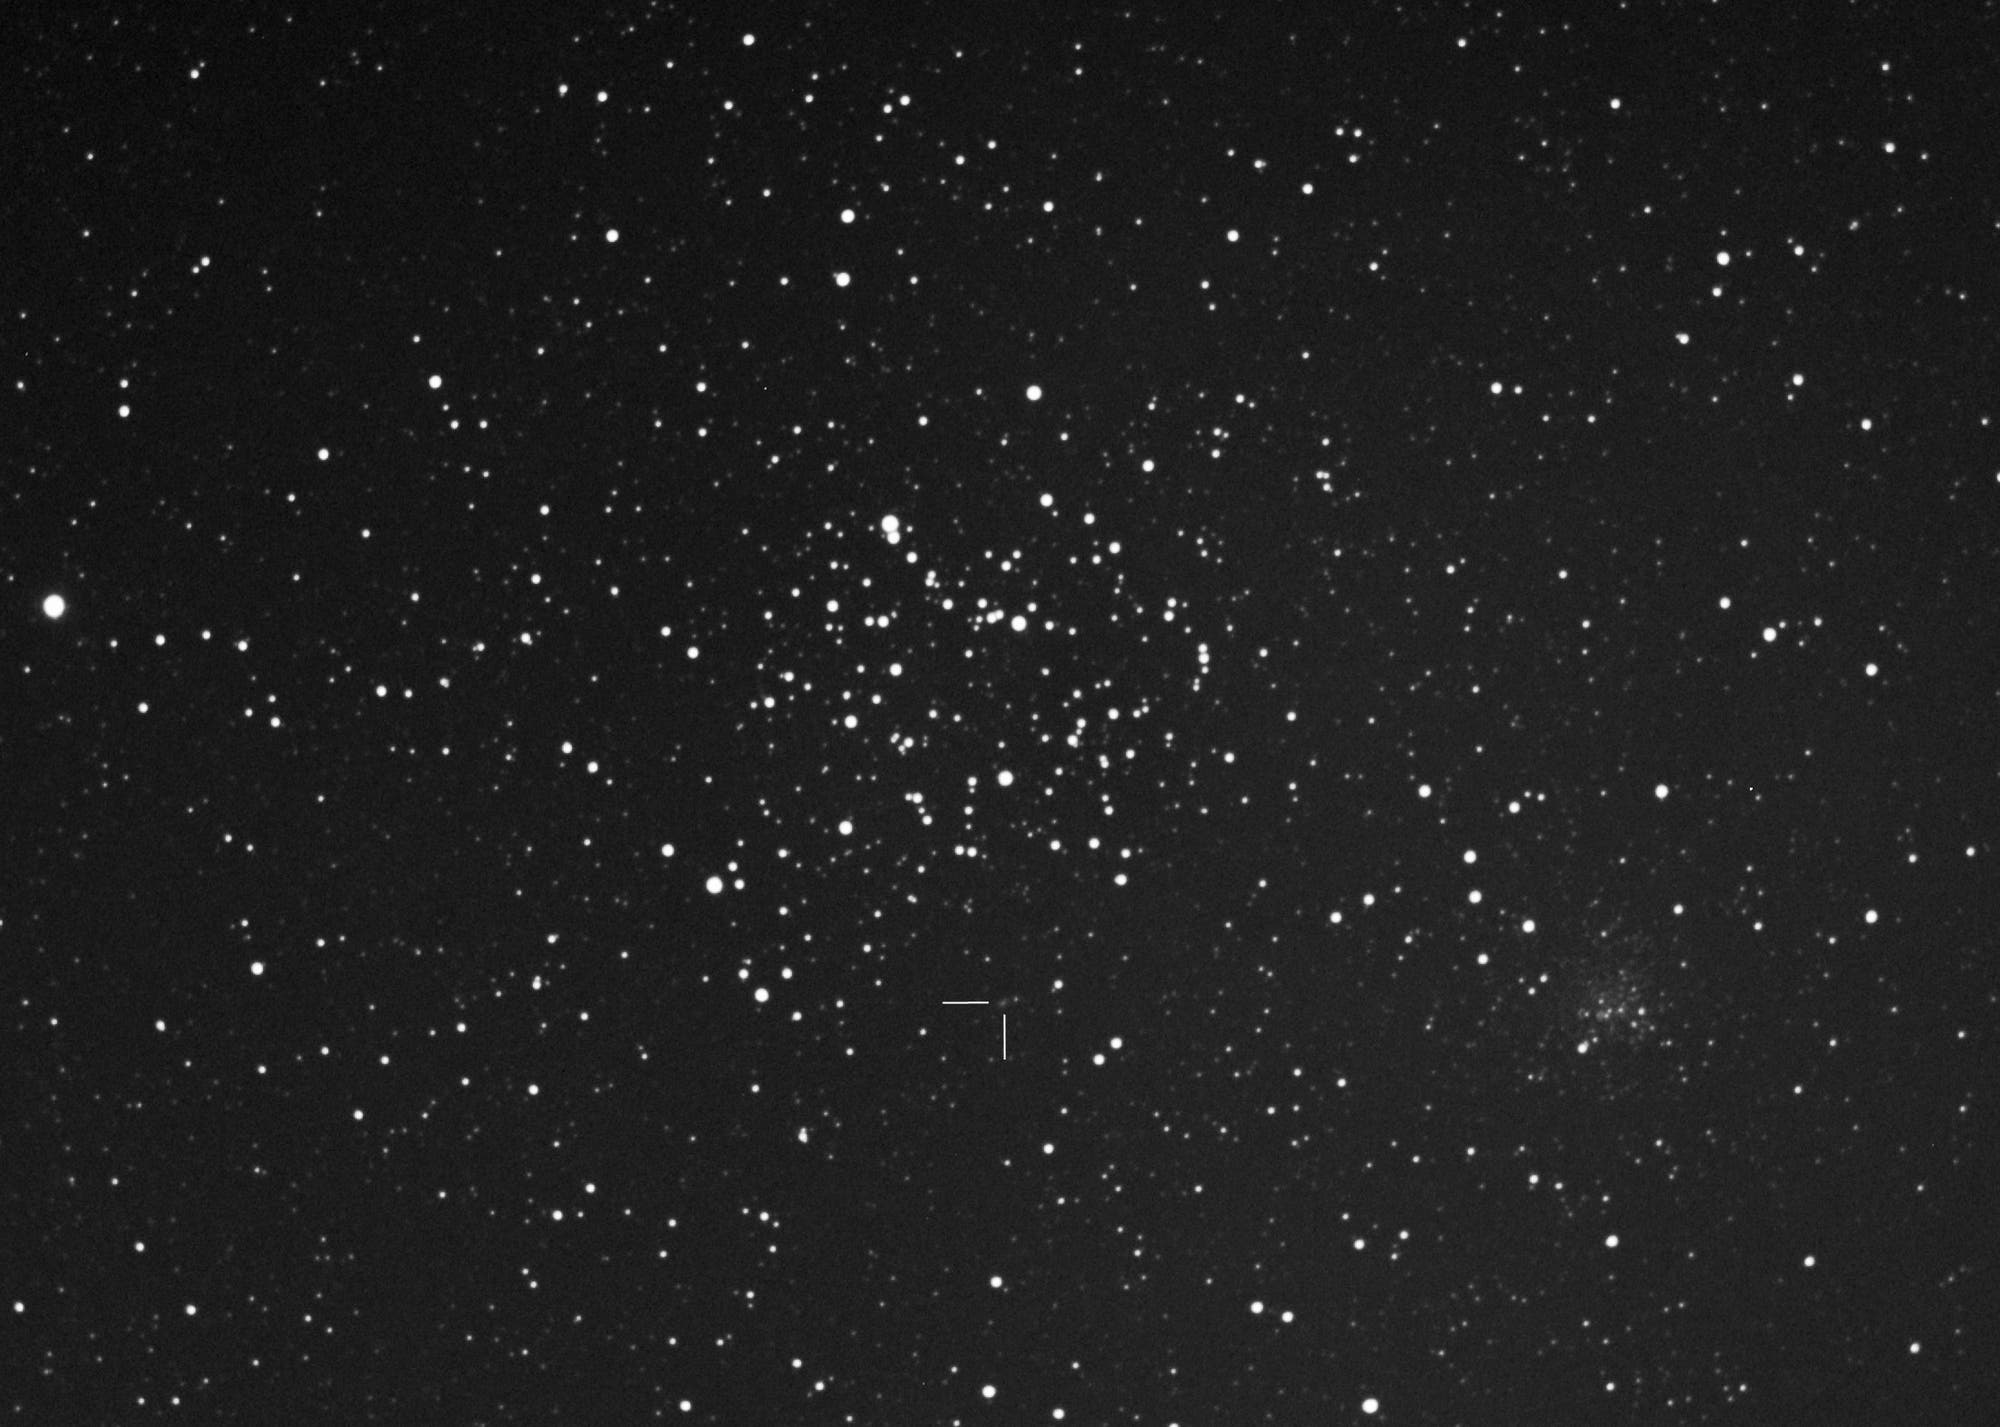 Tschurjumow-Gerasimenko 67P bei M35